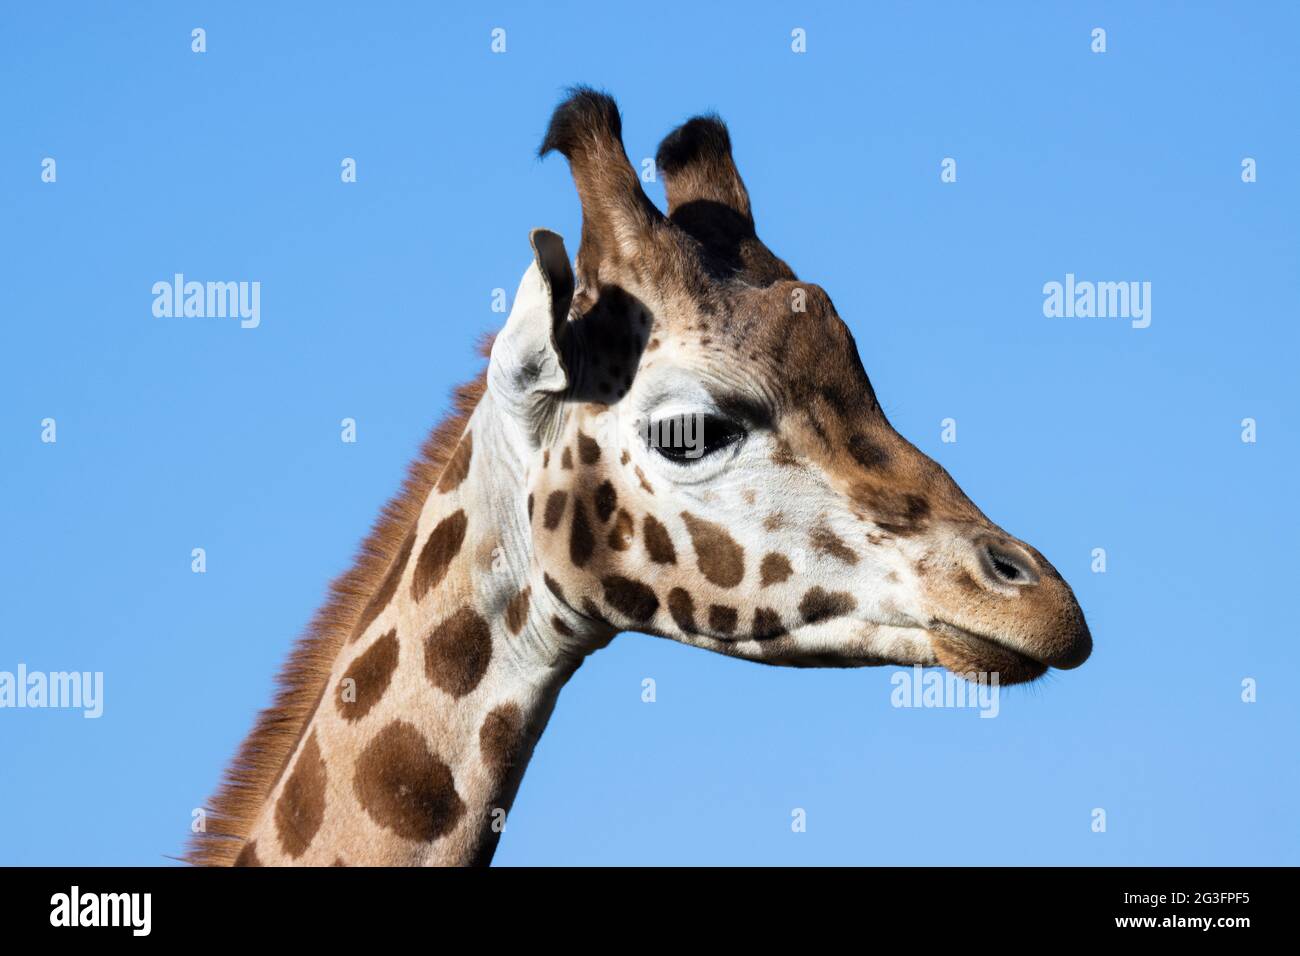 A headshot of a hungry looking giraffe Stock Photo